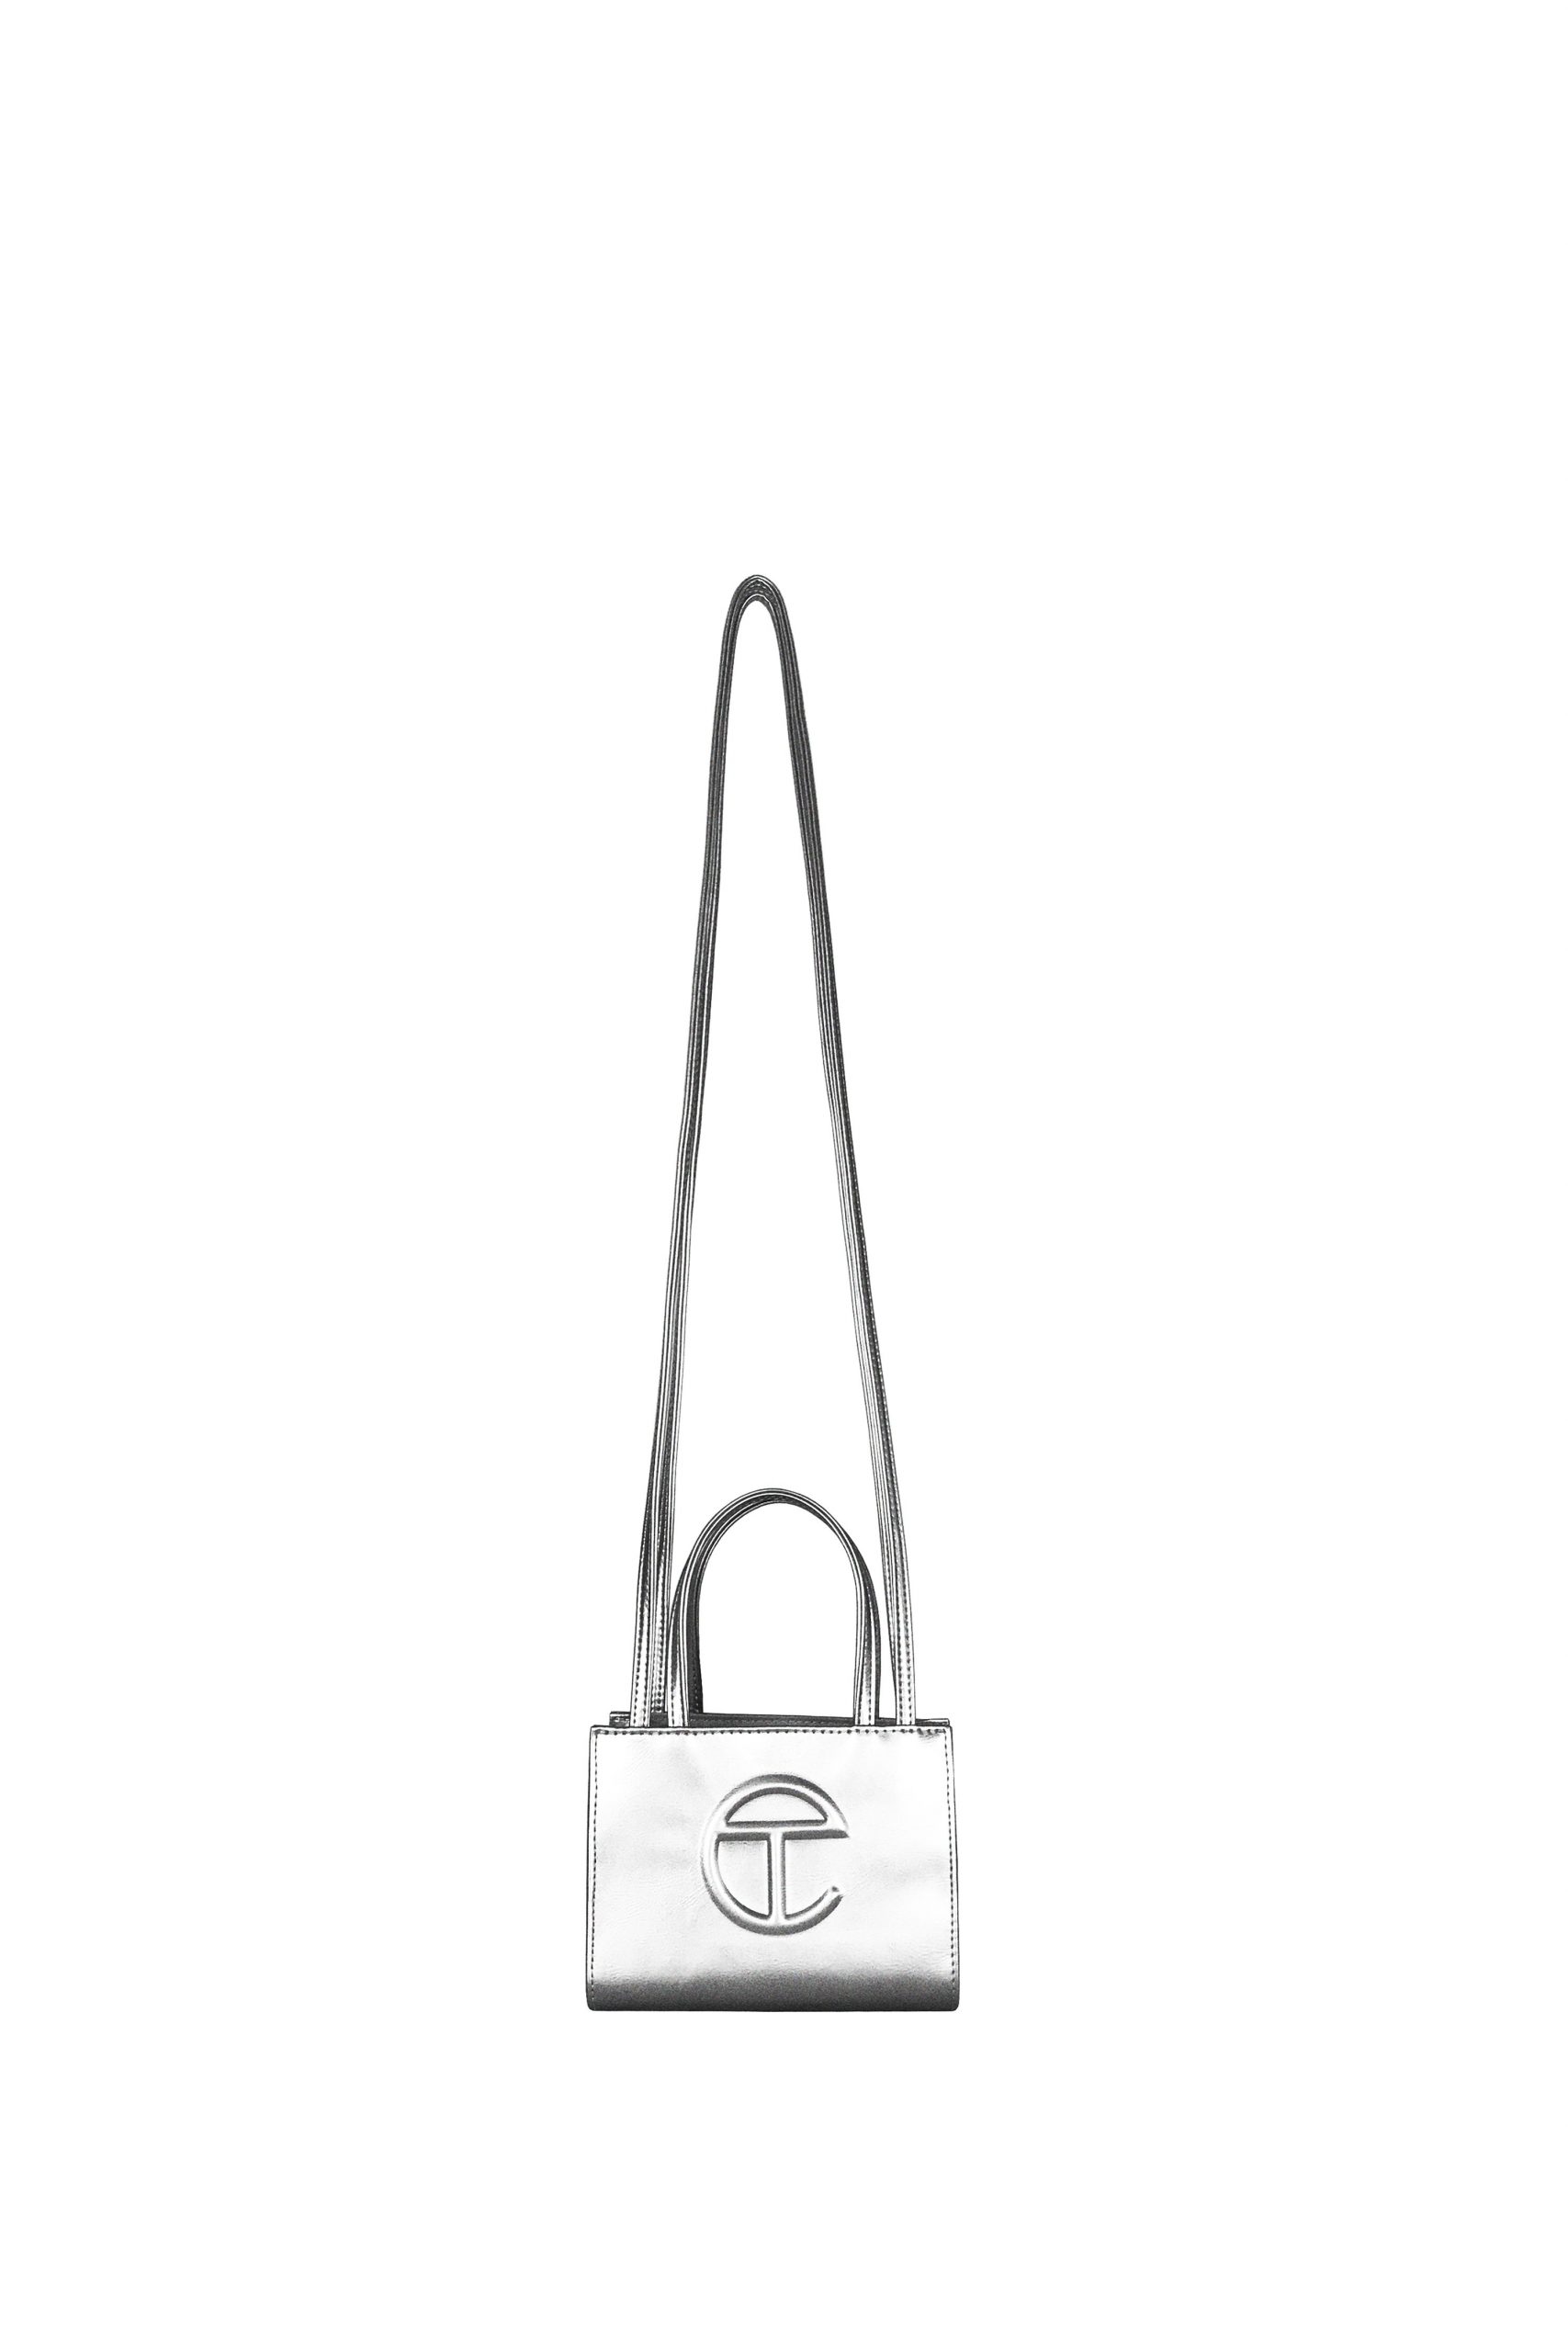 Small Silver Shopping Bag